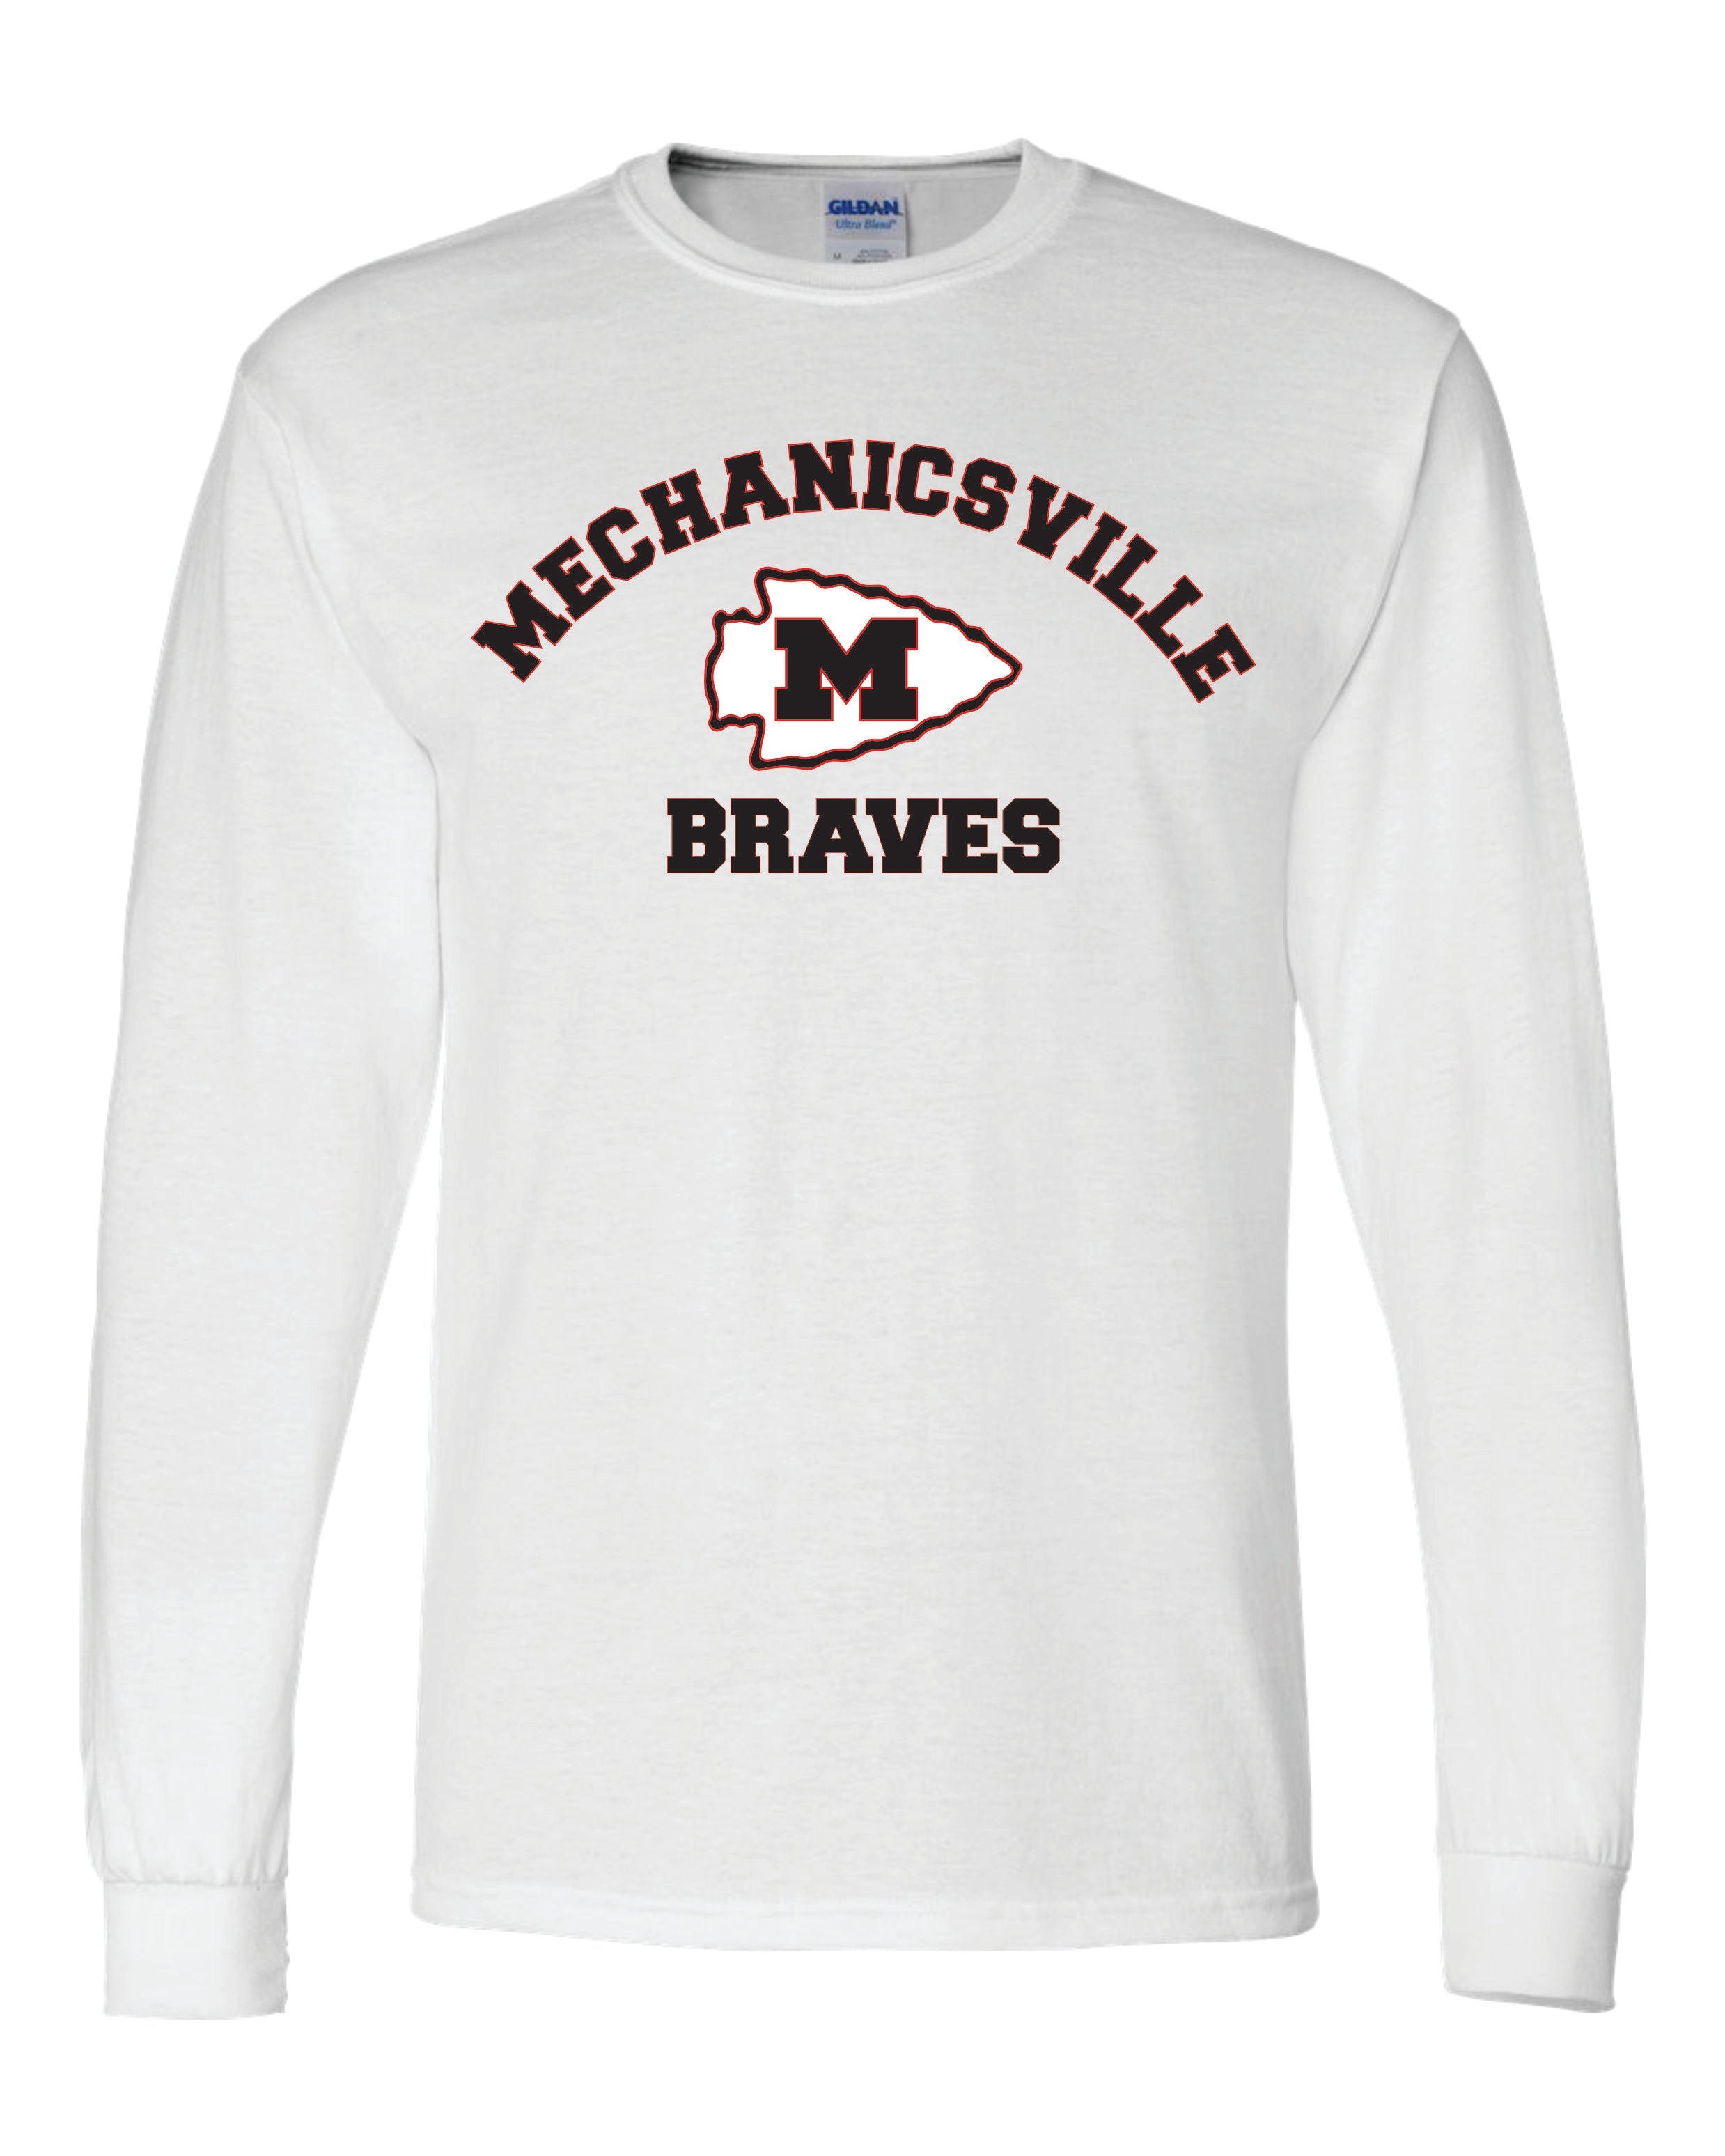 Mechanicsville Braves 50/50 Long Sleeve T-Shirts-YOUTH